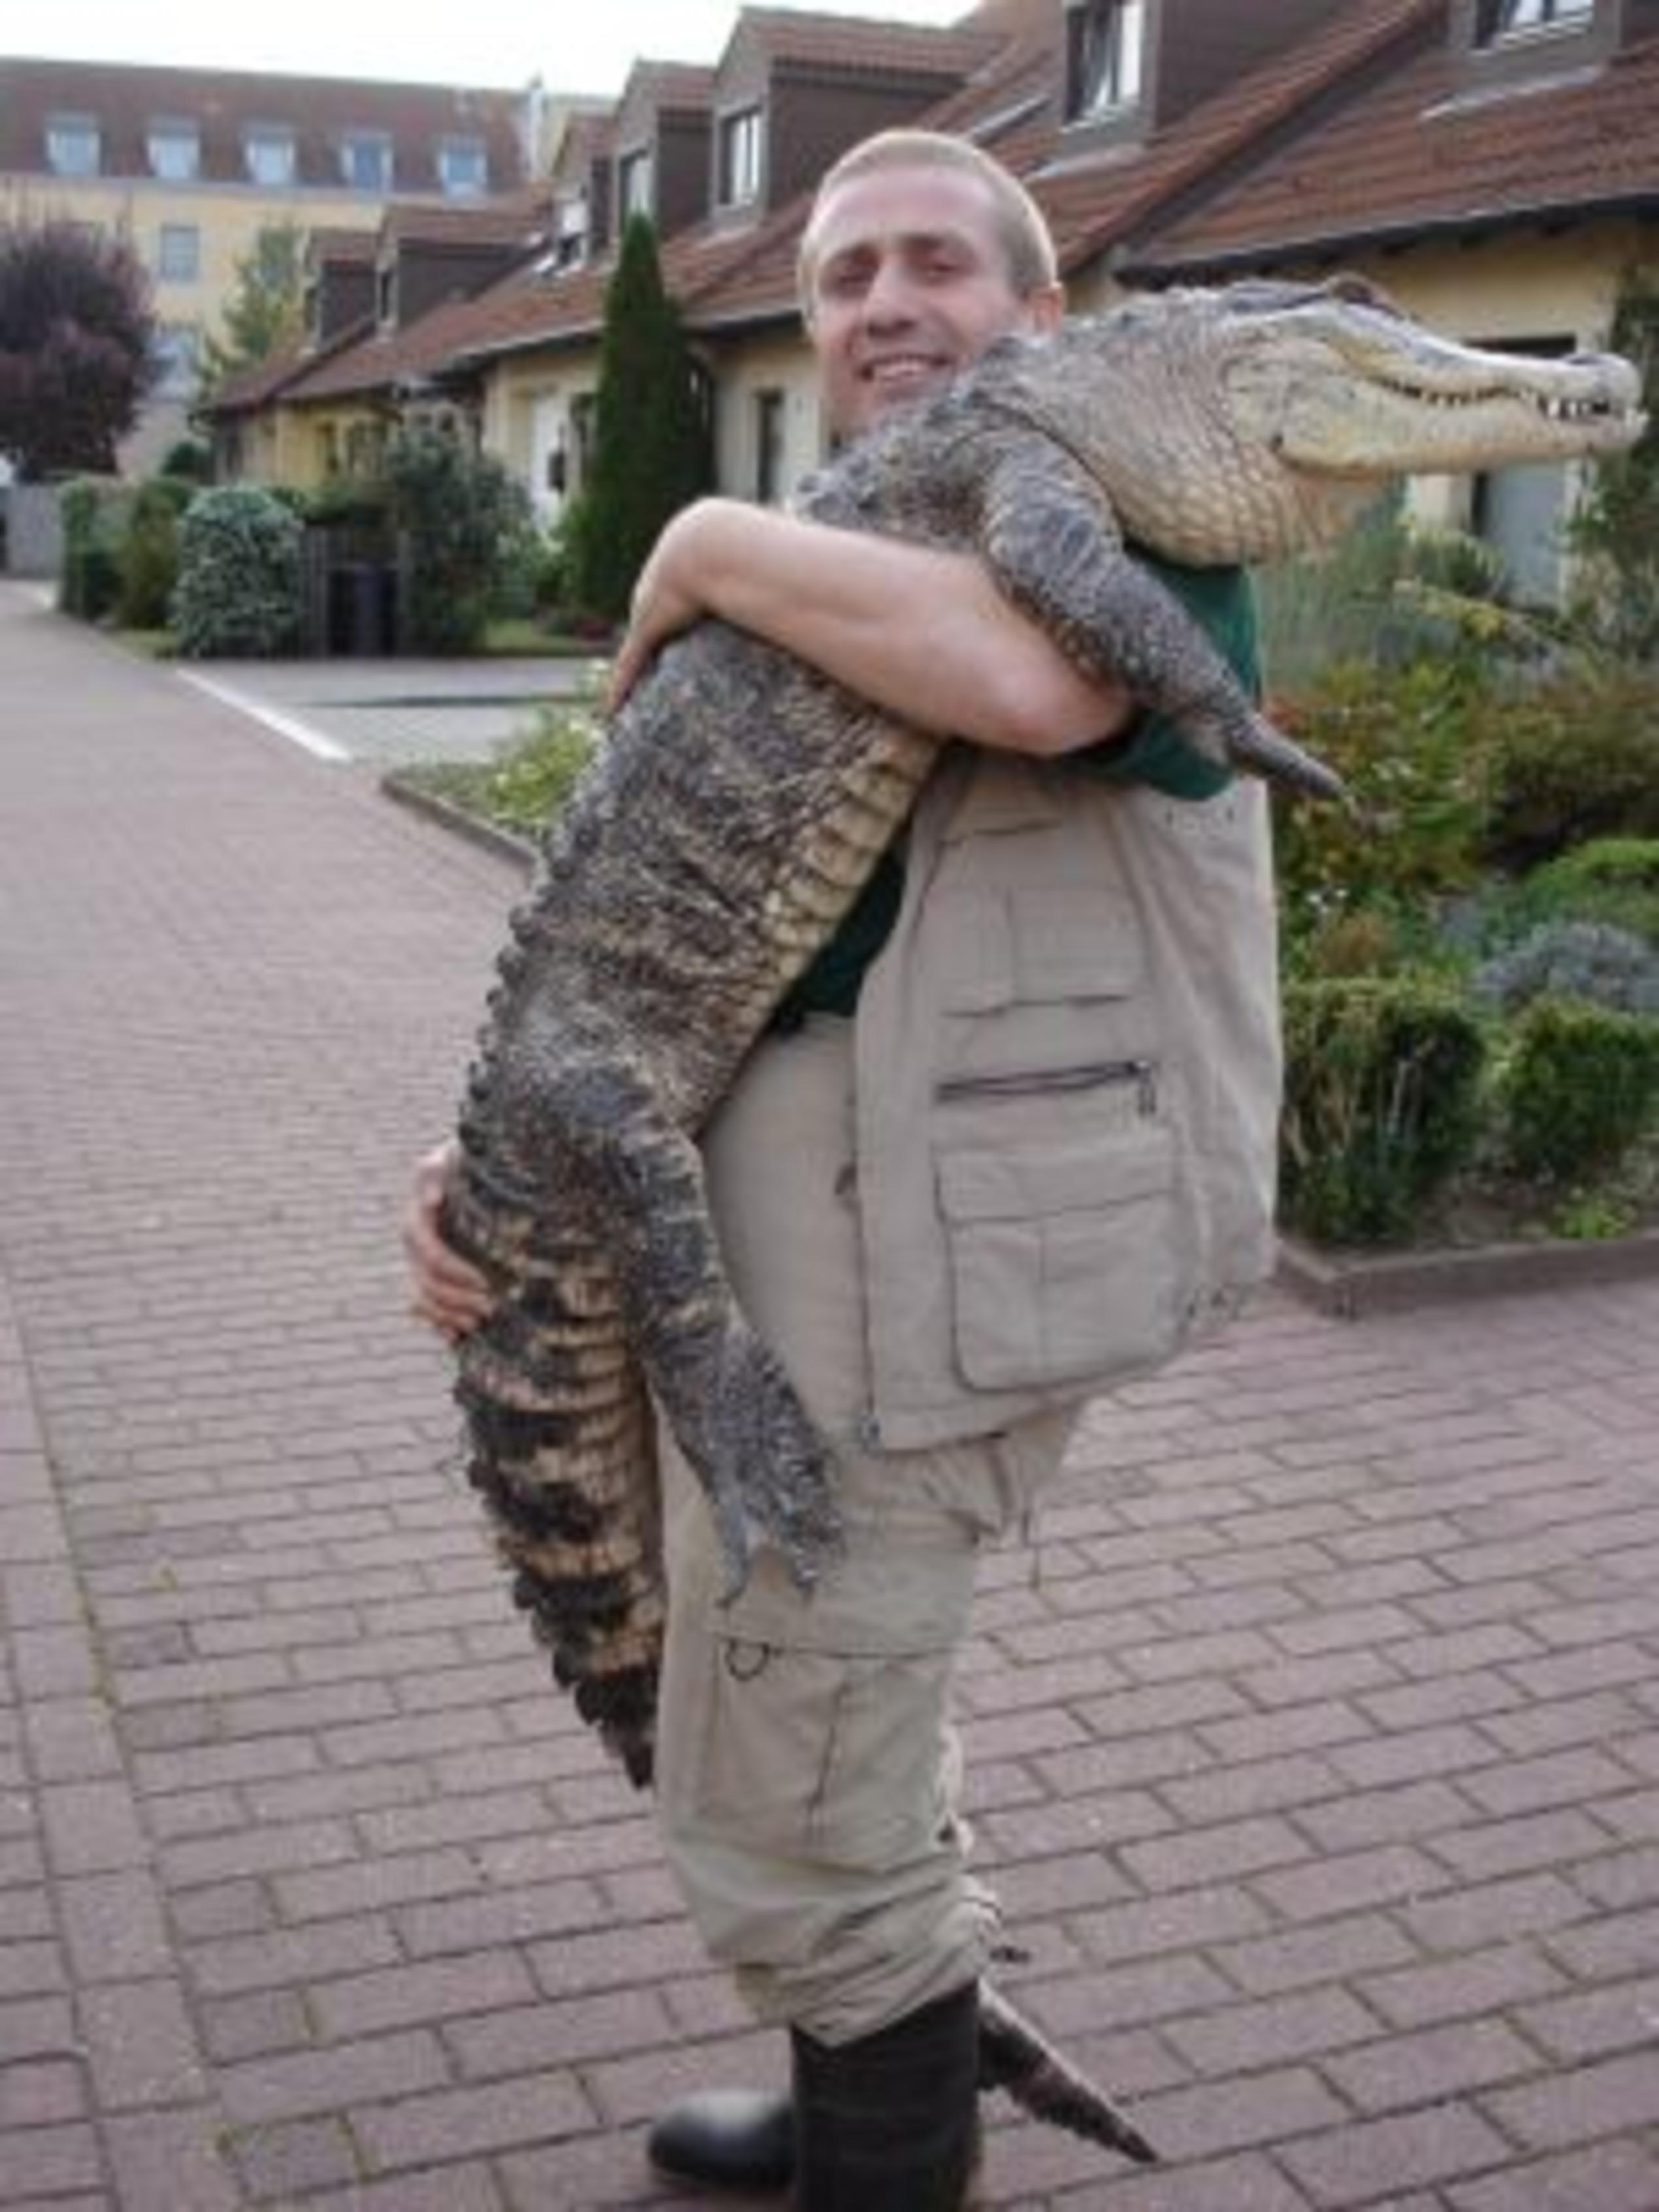 Oratio Martino mit Alligator Giorgio auf dem Arm. Foto: VOX/Christian Ehrlich